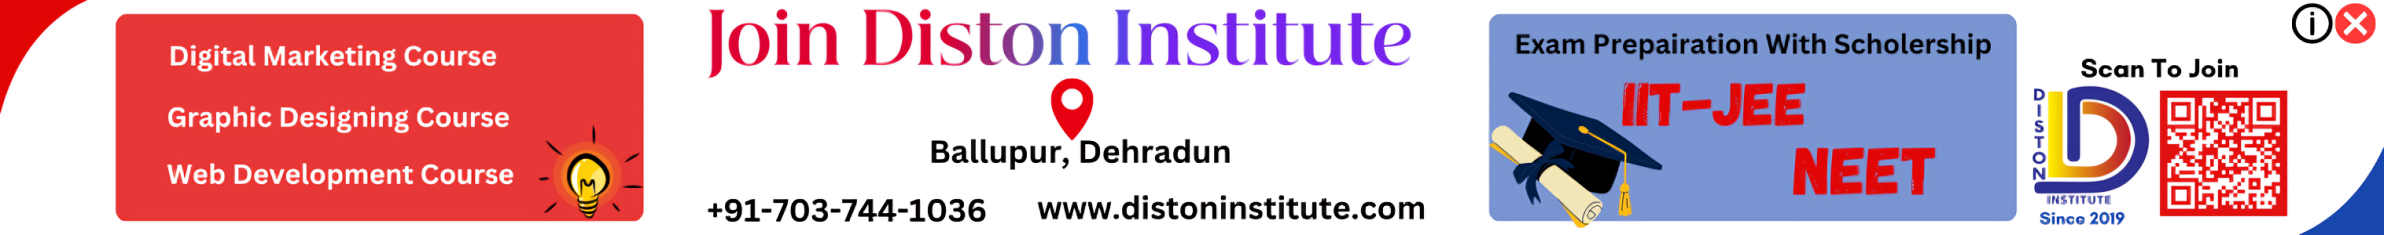 diston institute banner